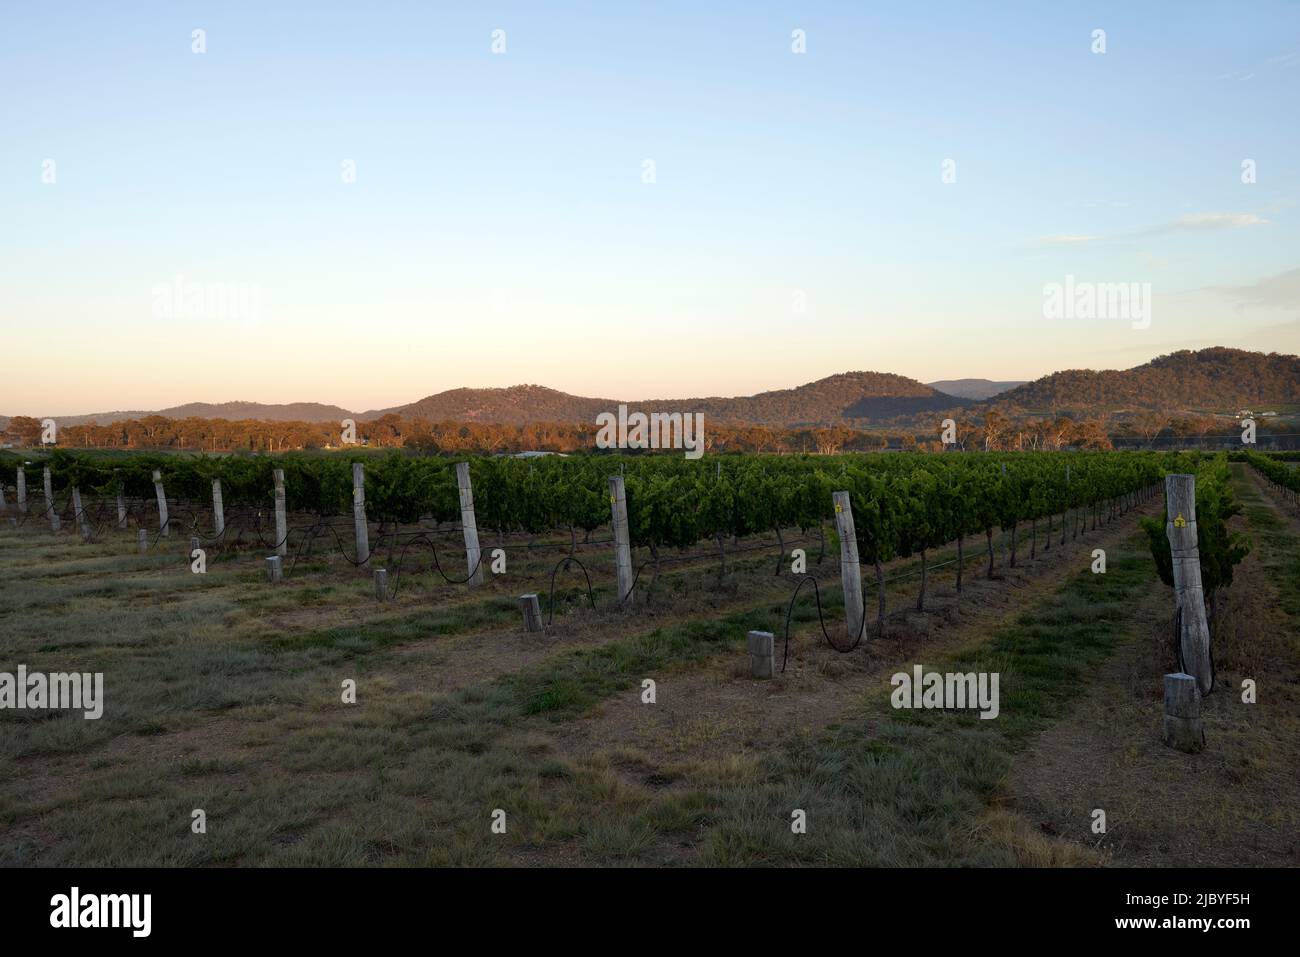 Rows of grapevines in vineyard at Ballandean, The Granite Belt, Australia Stock Photo